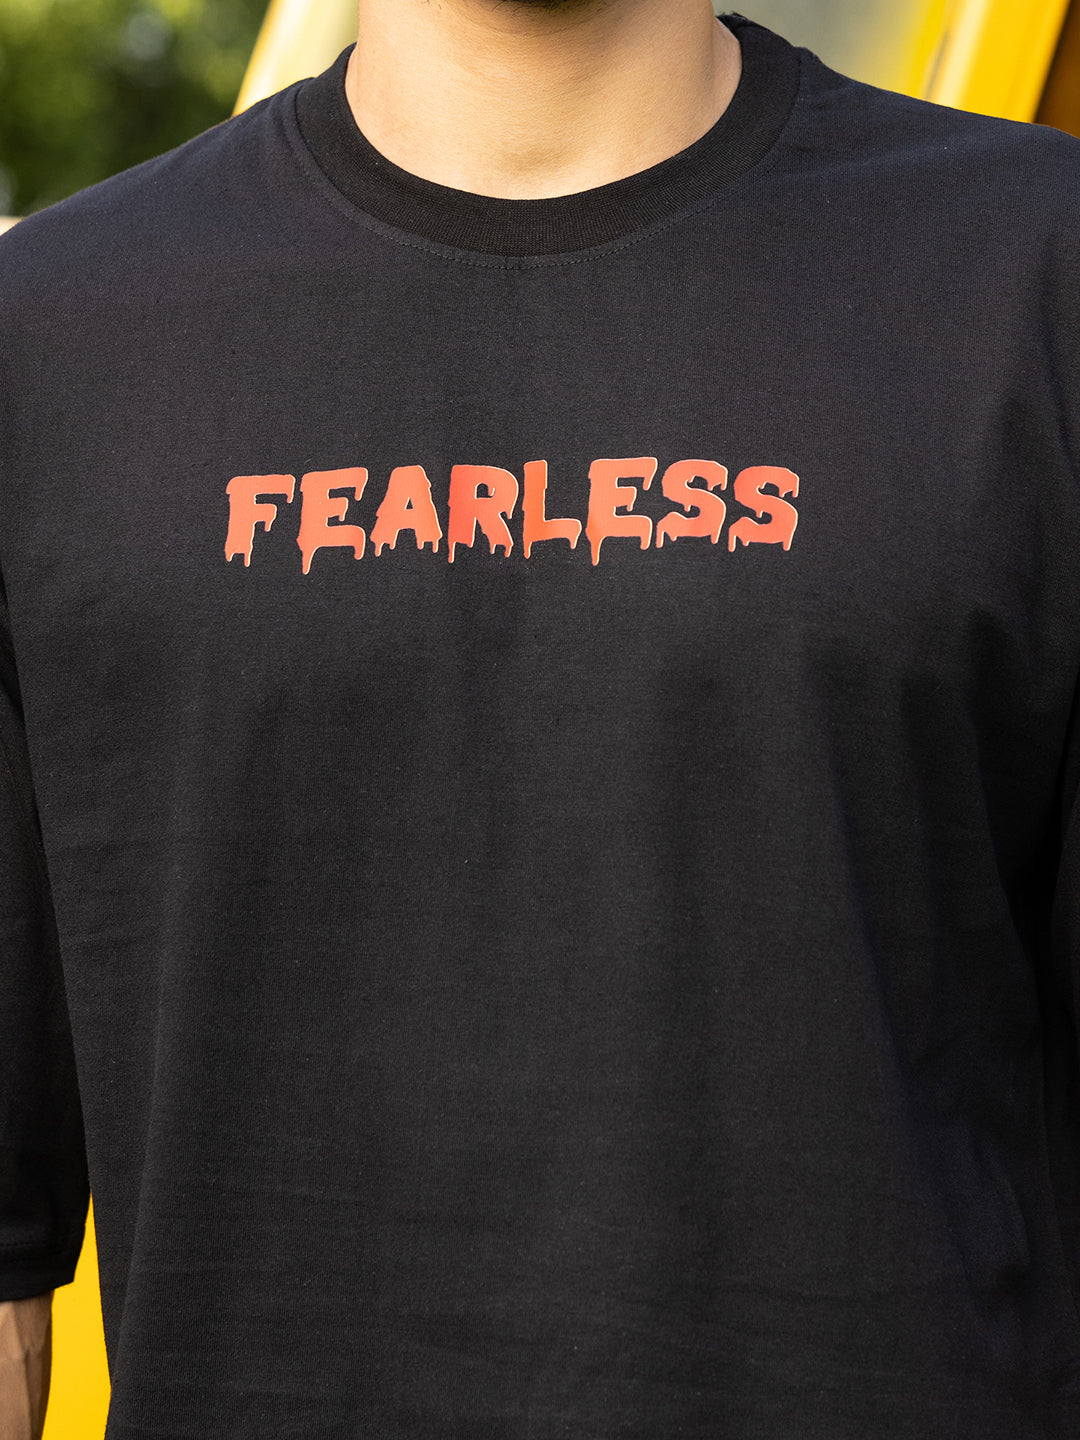 Fearless Black Oversized Drop shoulder Tee by Gavin Paris